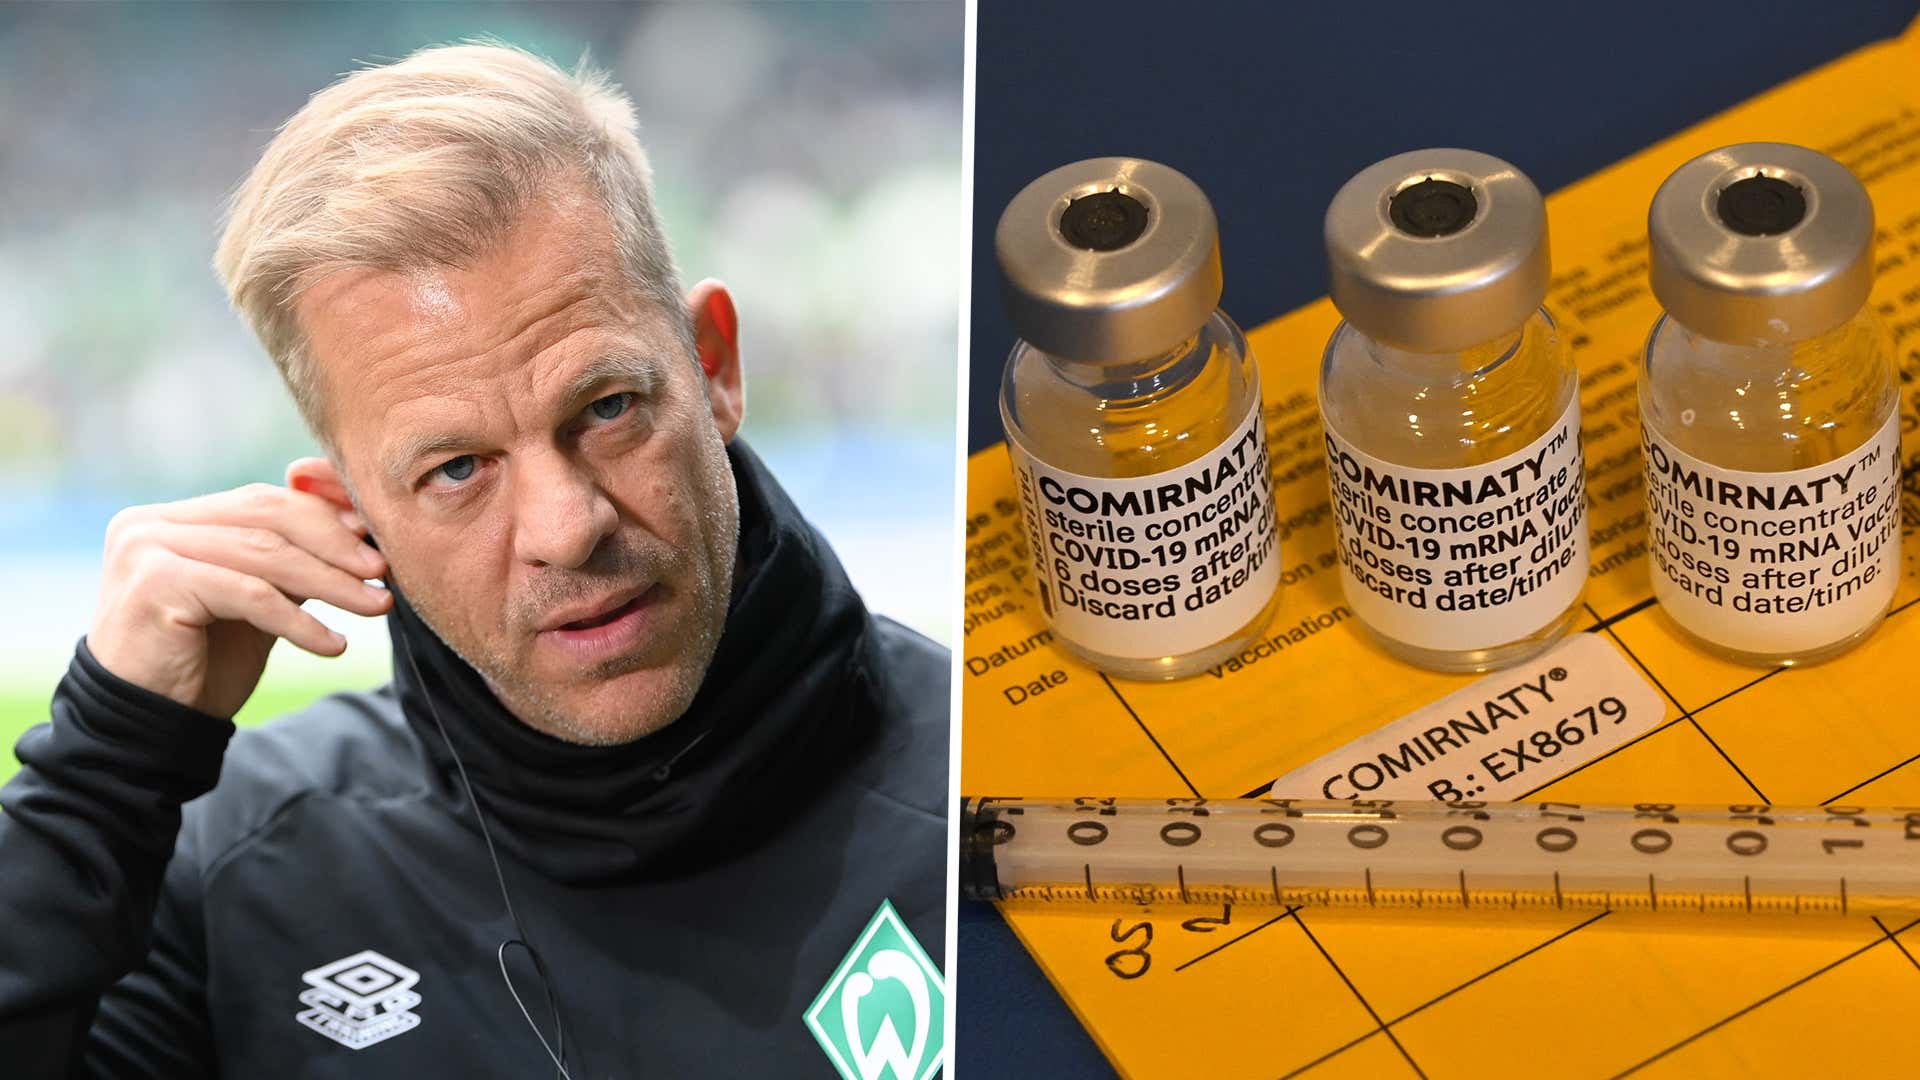 Markus Anfang Werder Bremen Covid-19 vaccine